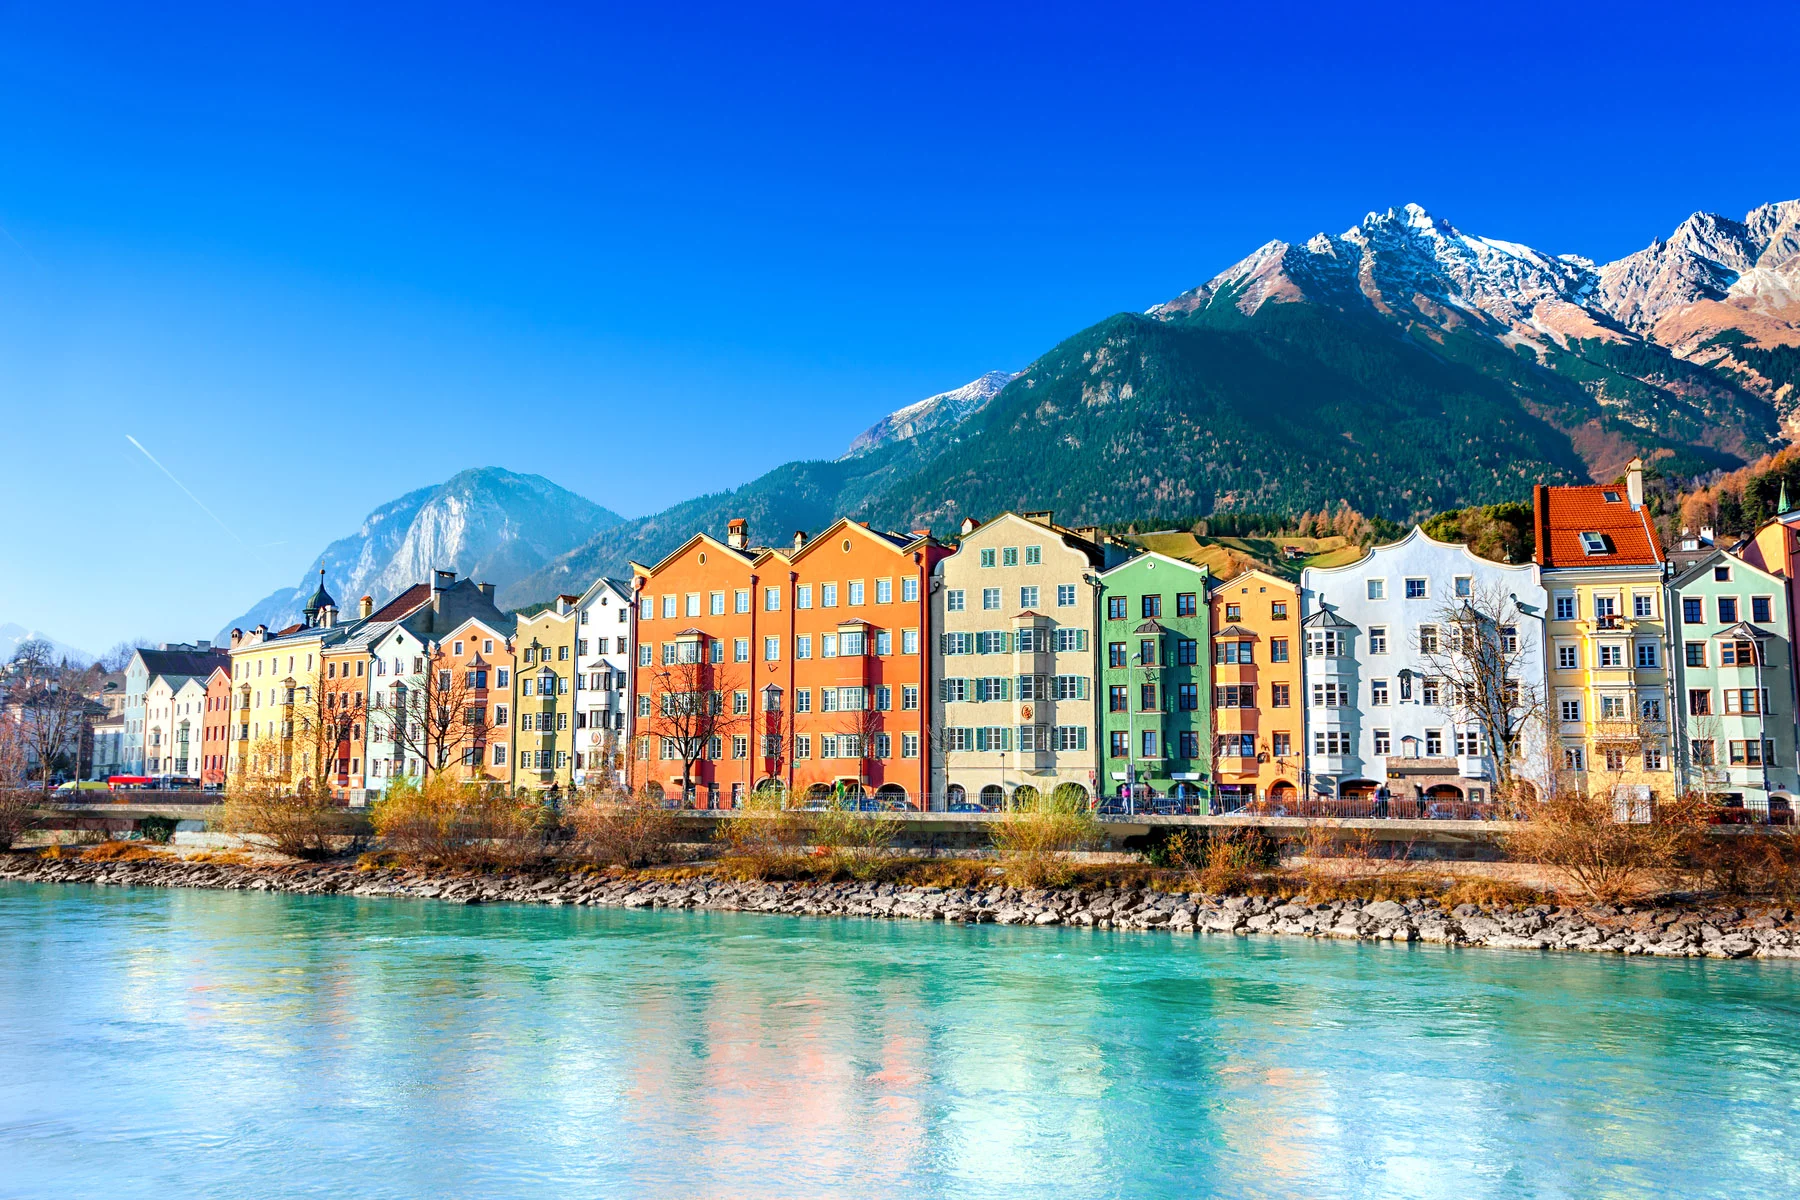 Innsbruck cityscape